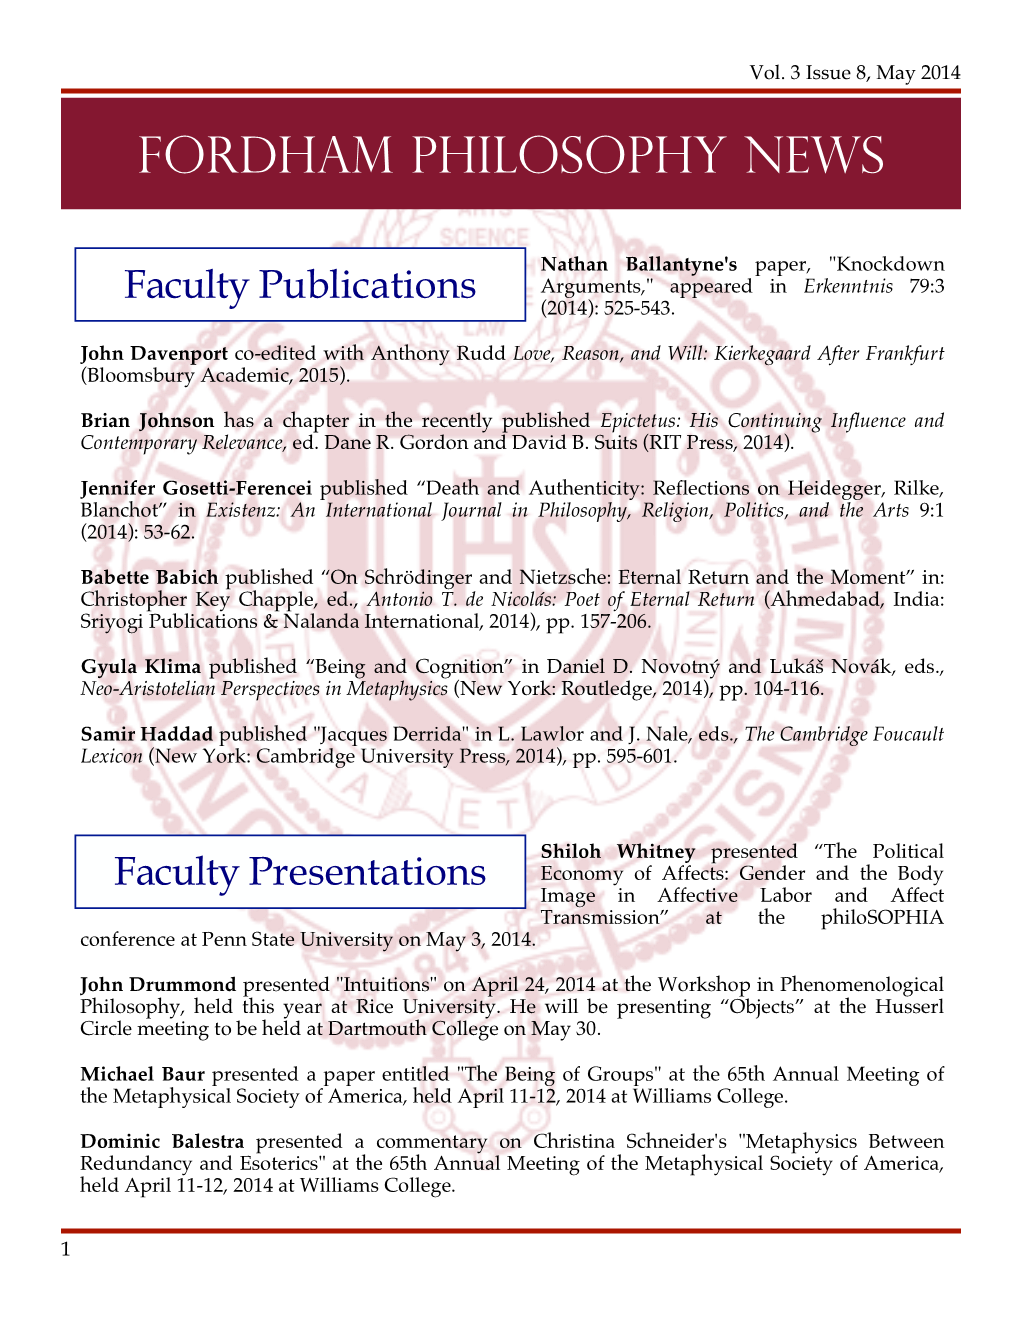 Fordham Philosophy News